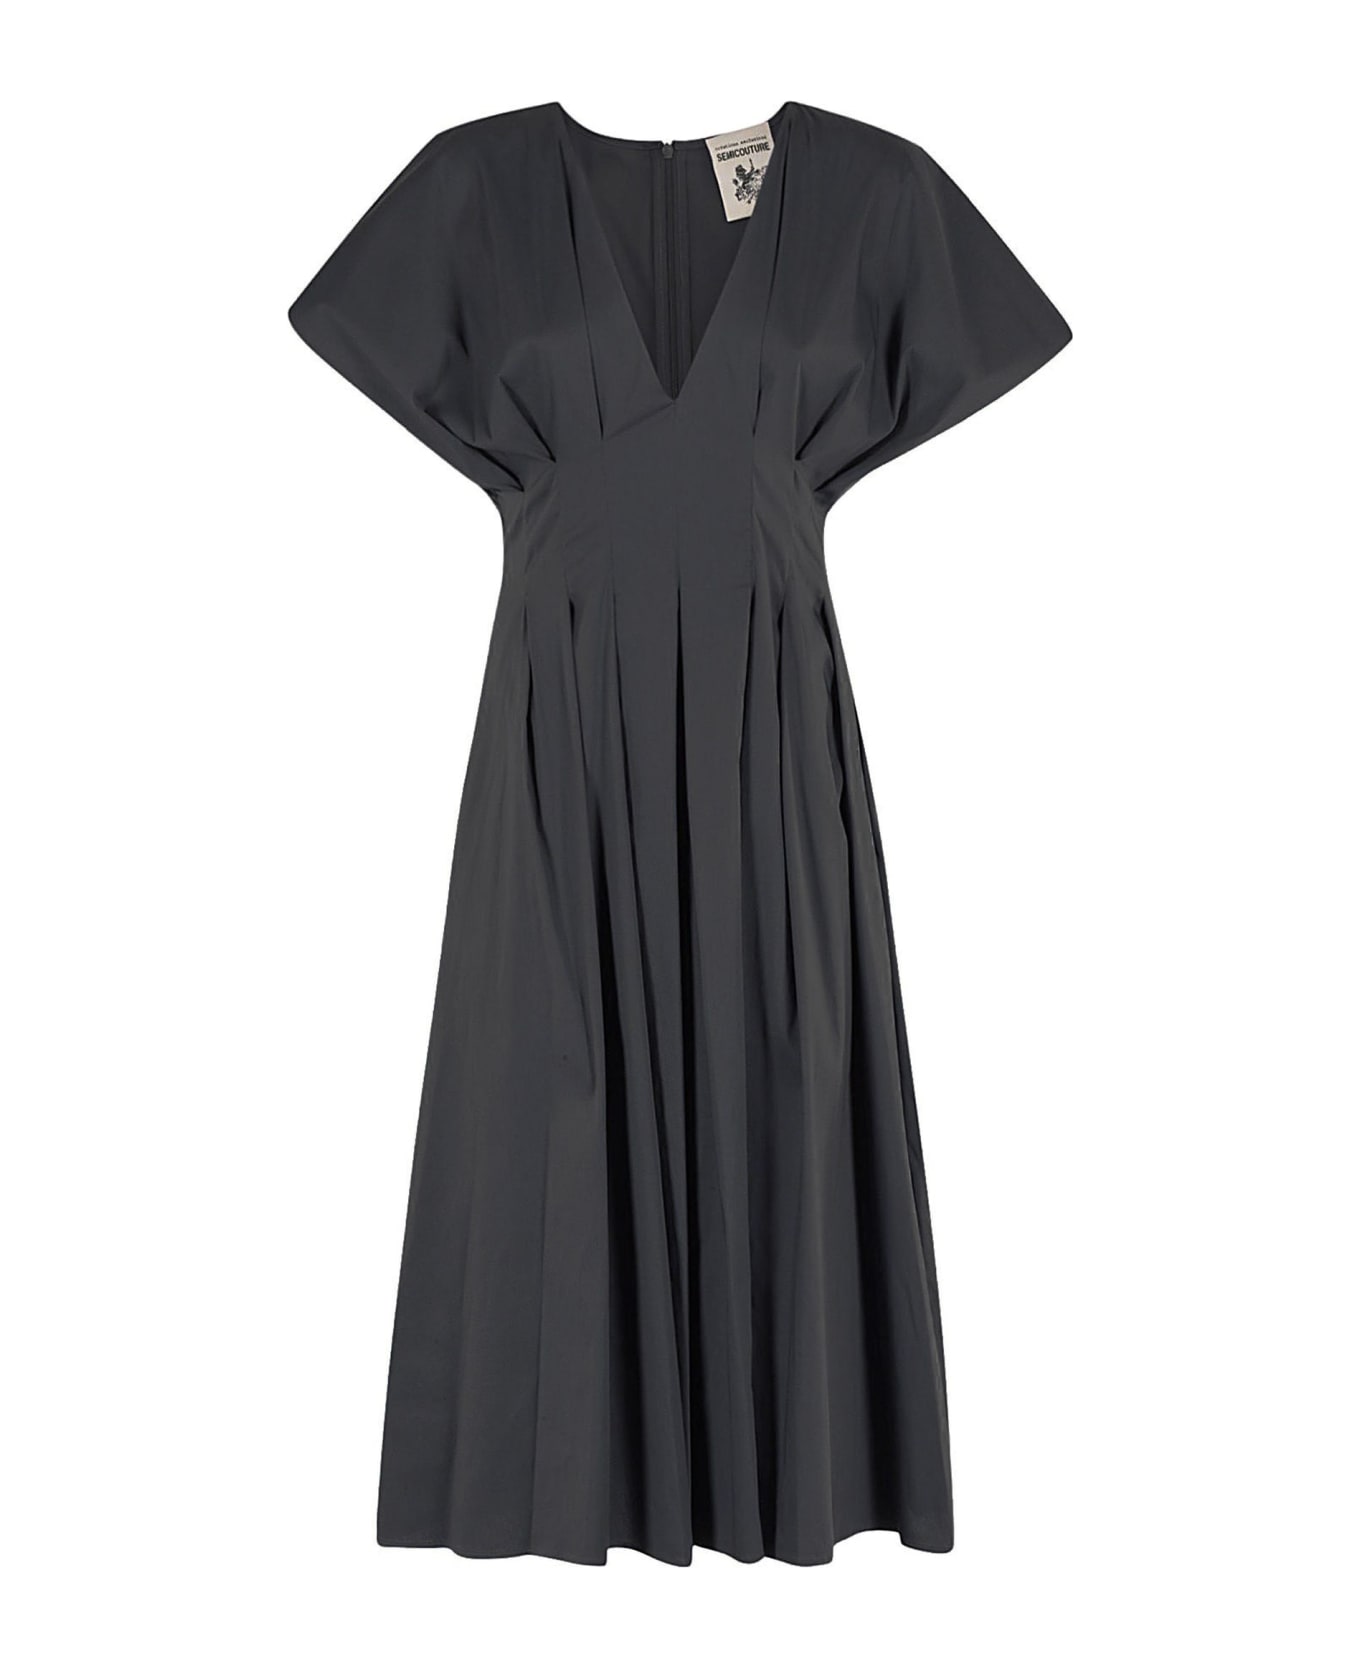 SEMICOUTURE Black Cotton Poplin Dress - Black